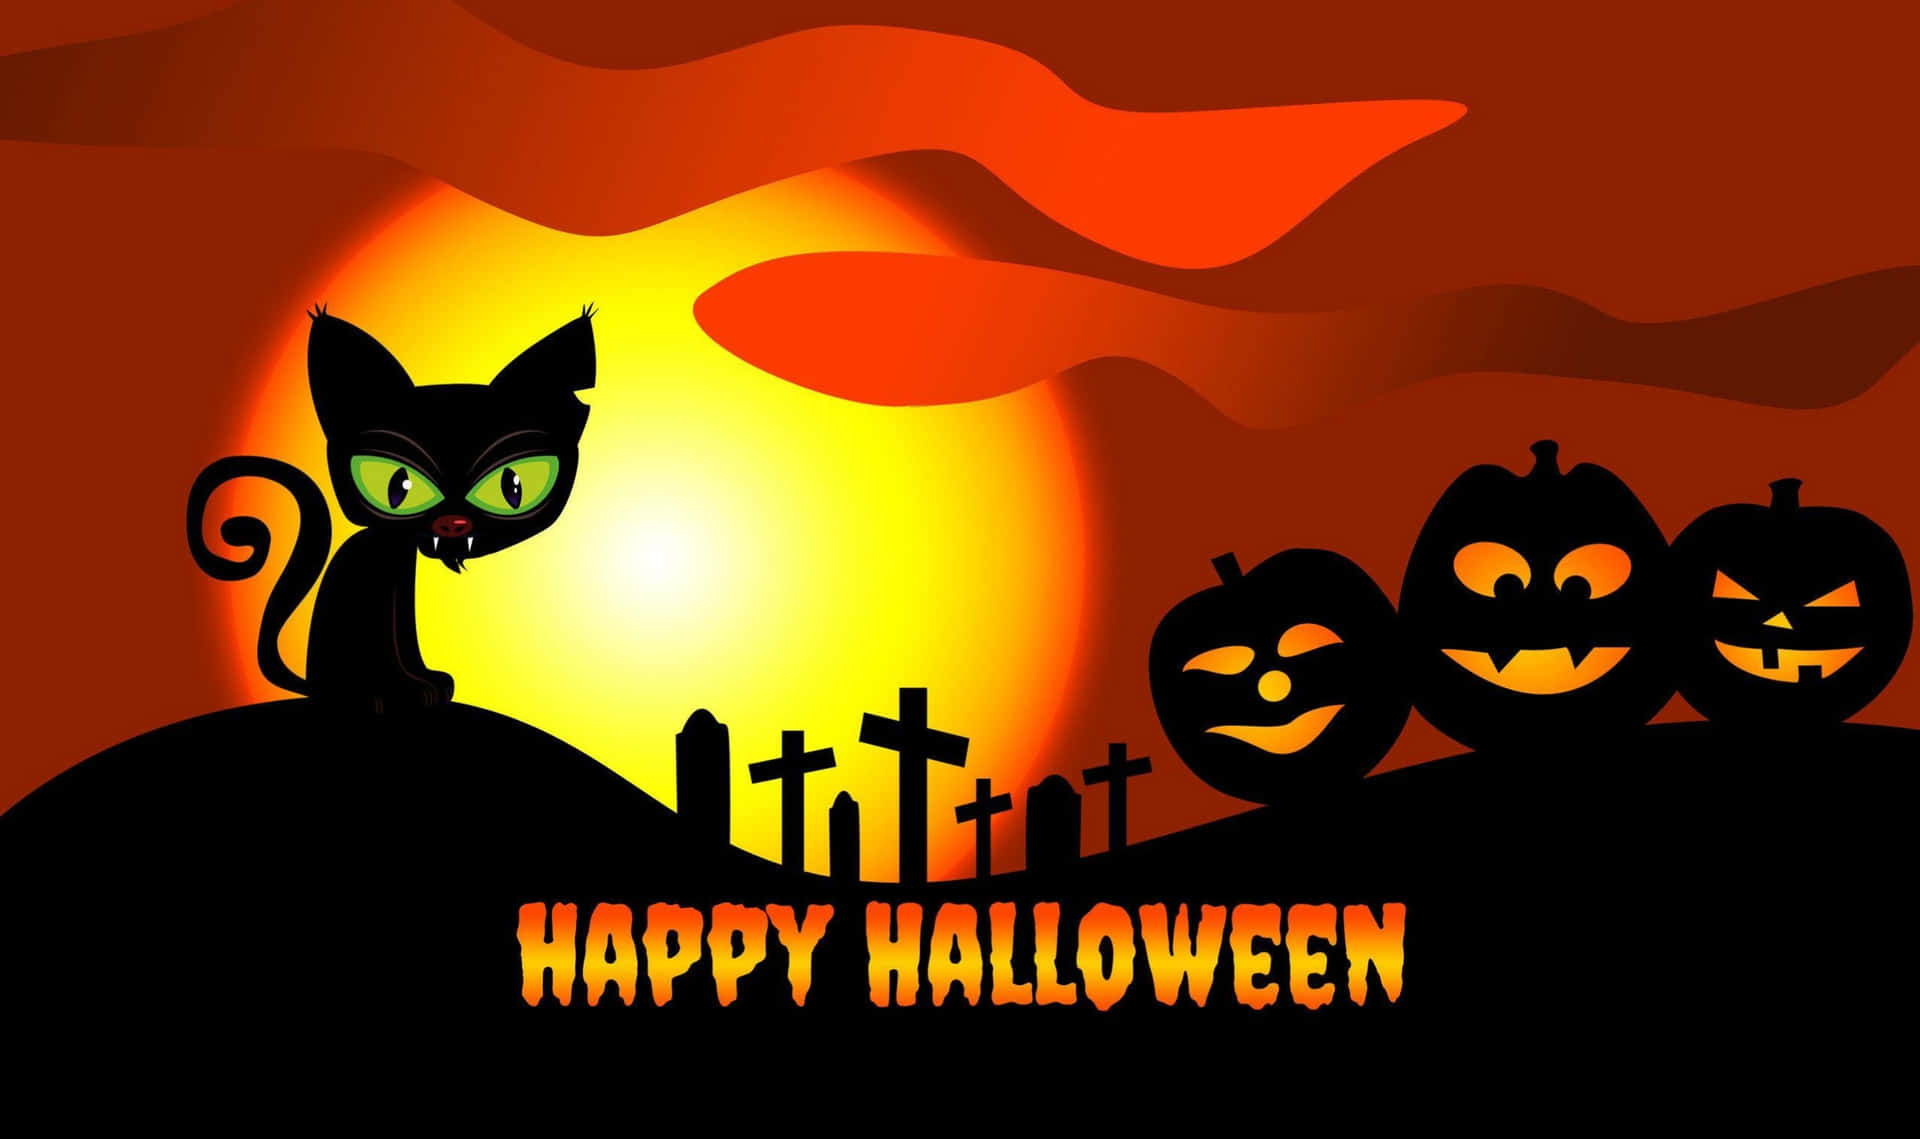 Imagende Halloween De Un Gato De Dibujos Animados Con Calabazas En Un Cementerio.